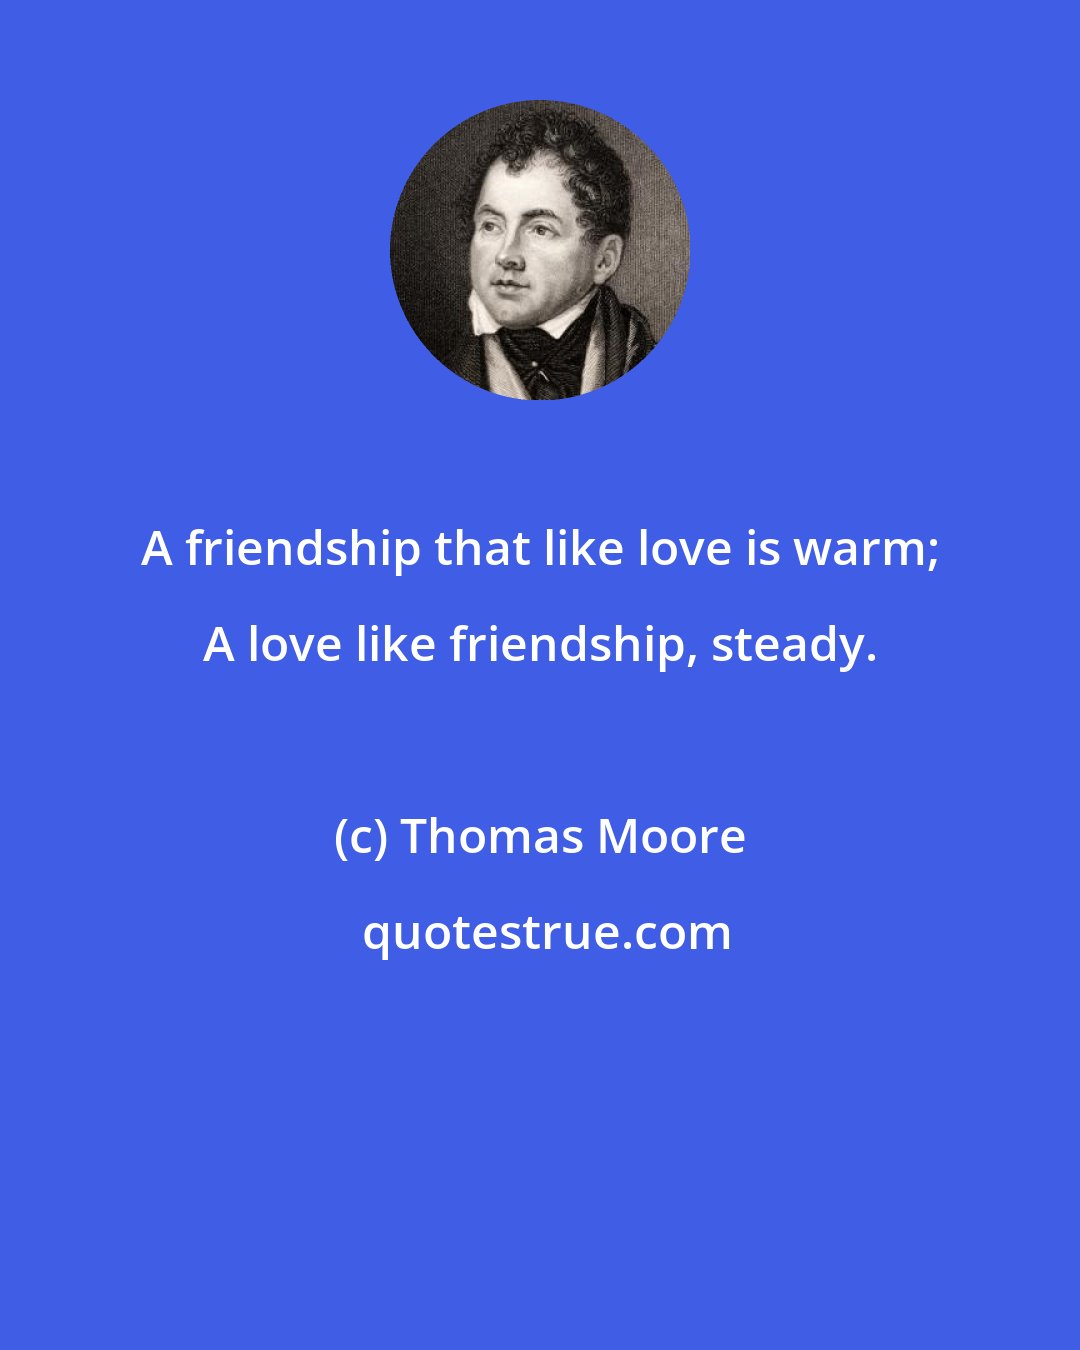 Thomas Moore: A friendship that like love is warm; A love like friendship, steady.